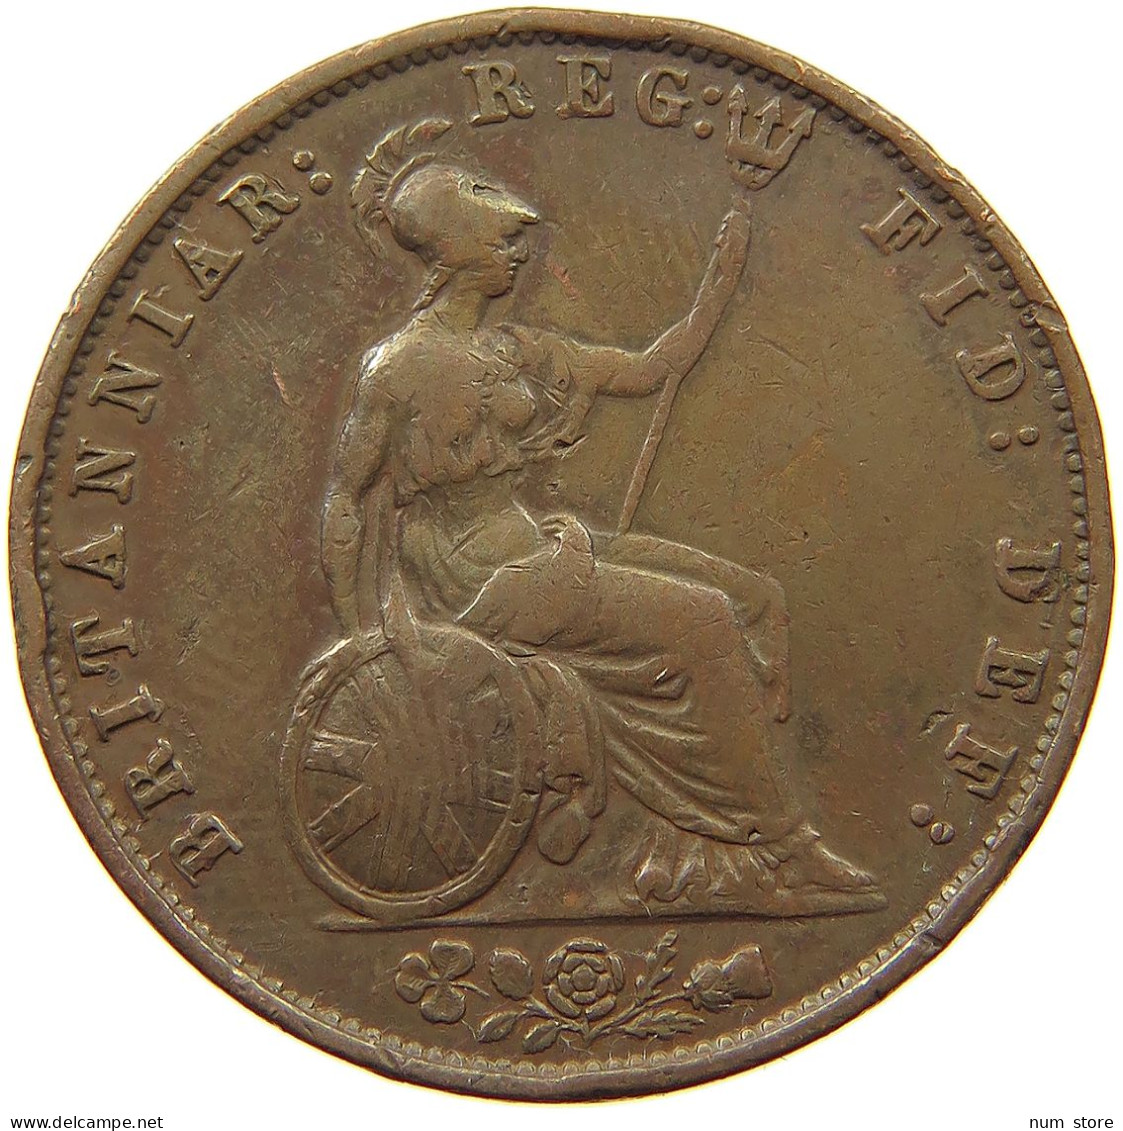 GREAT BRITAIN HALFPENNY 1858 Victoria 1837-1901 #a009 0077 - C. 1/2 Penny